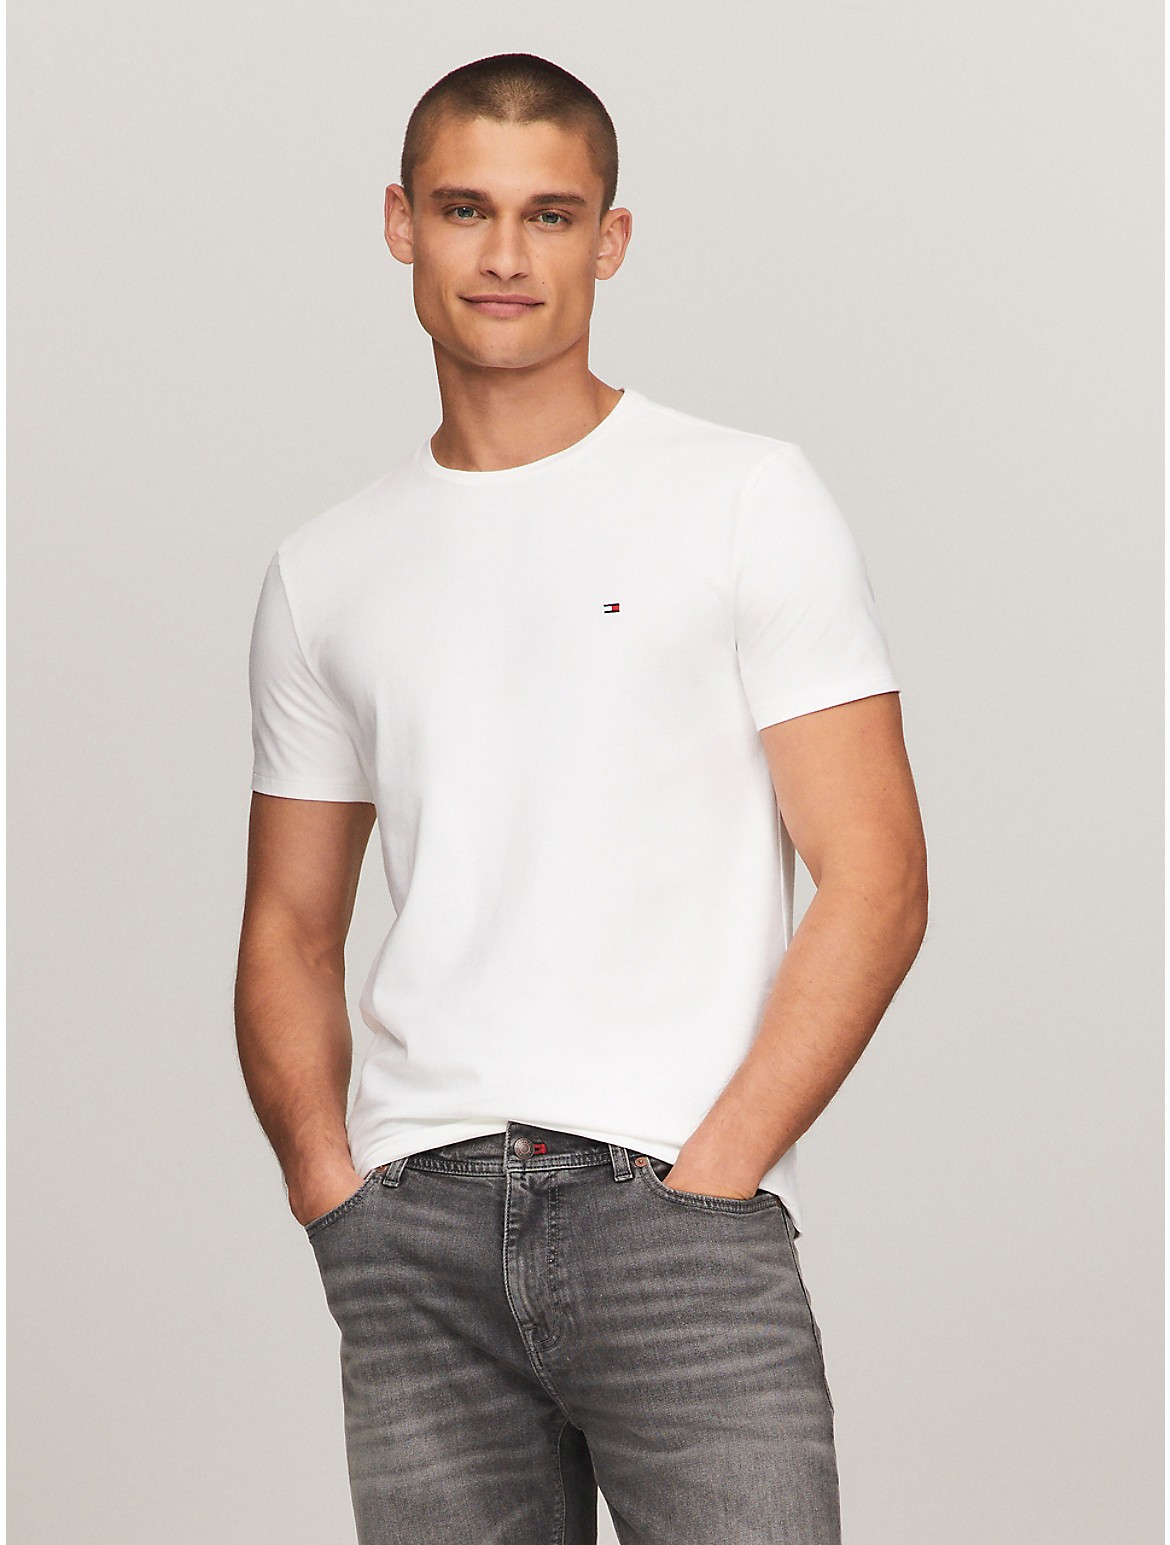 Tommy Hilfiger Men's Essential Solid T-Shirt